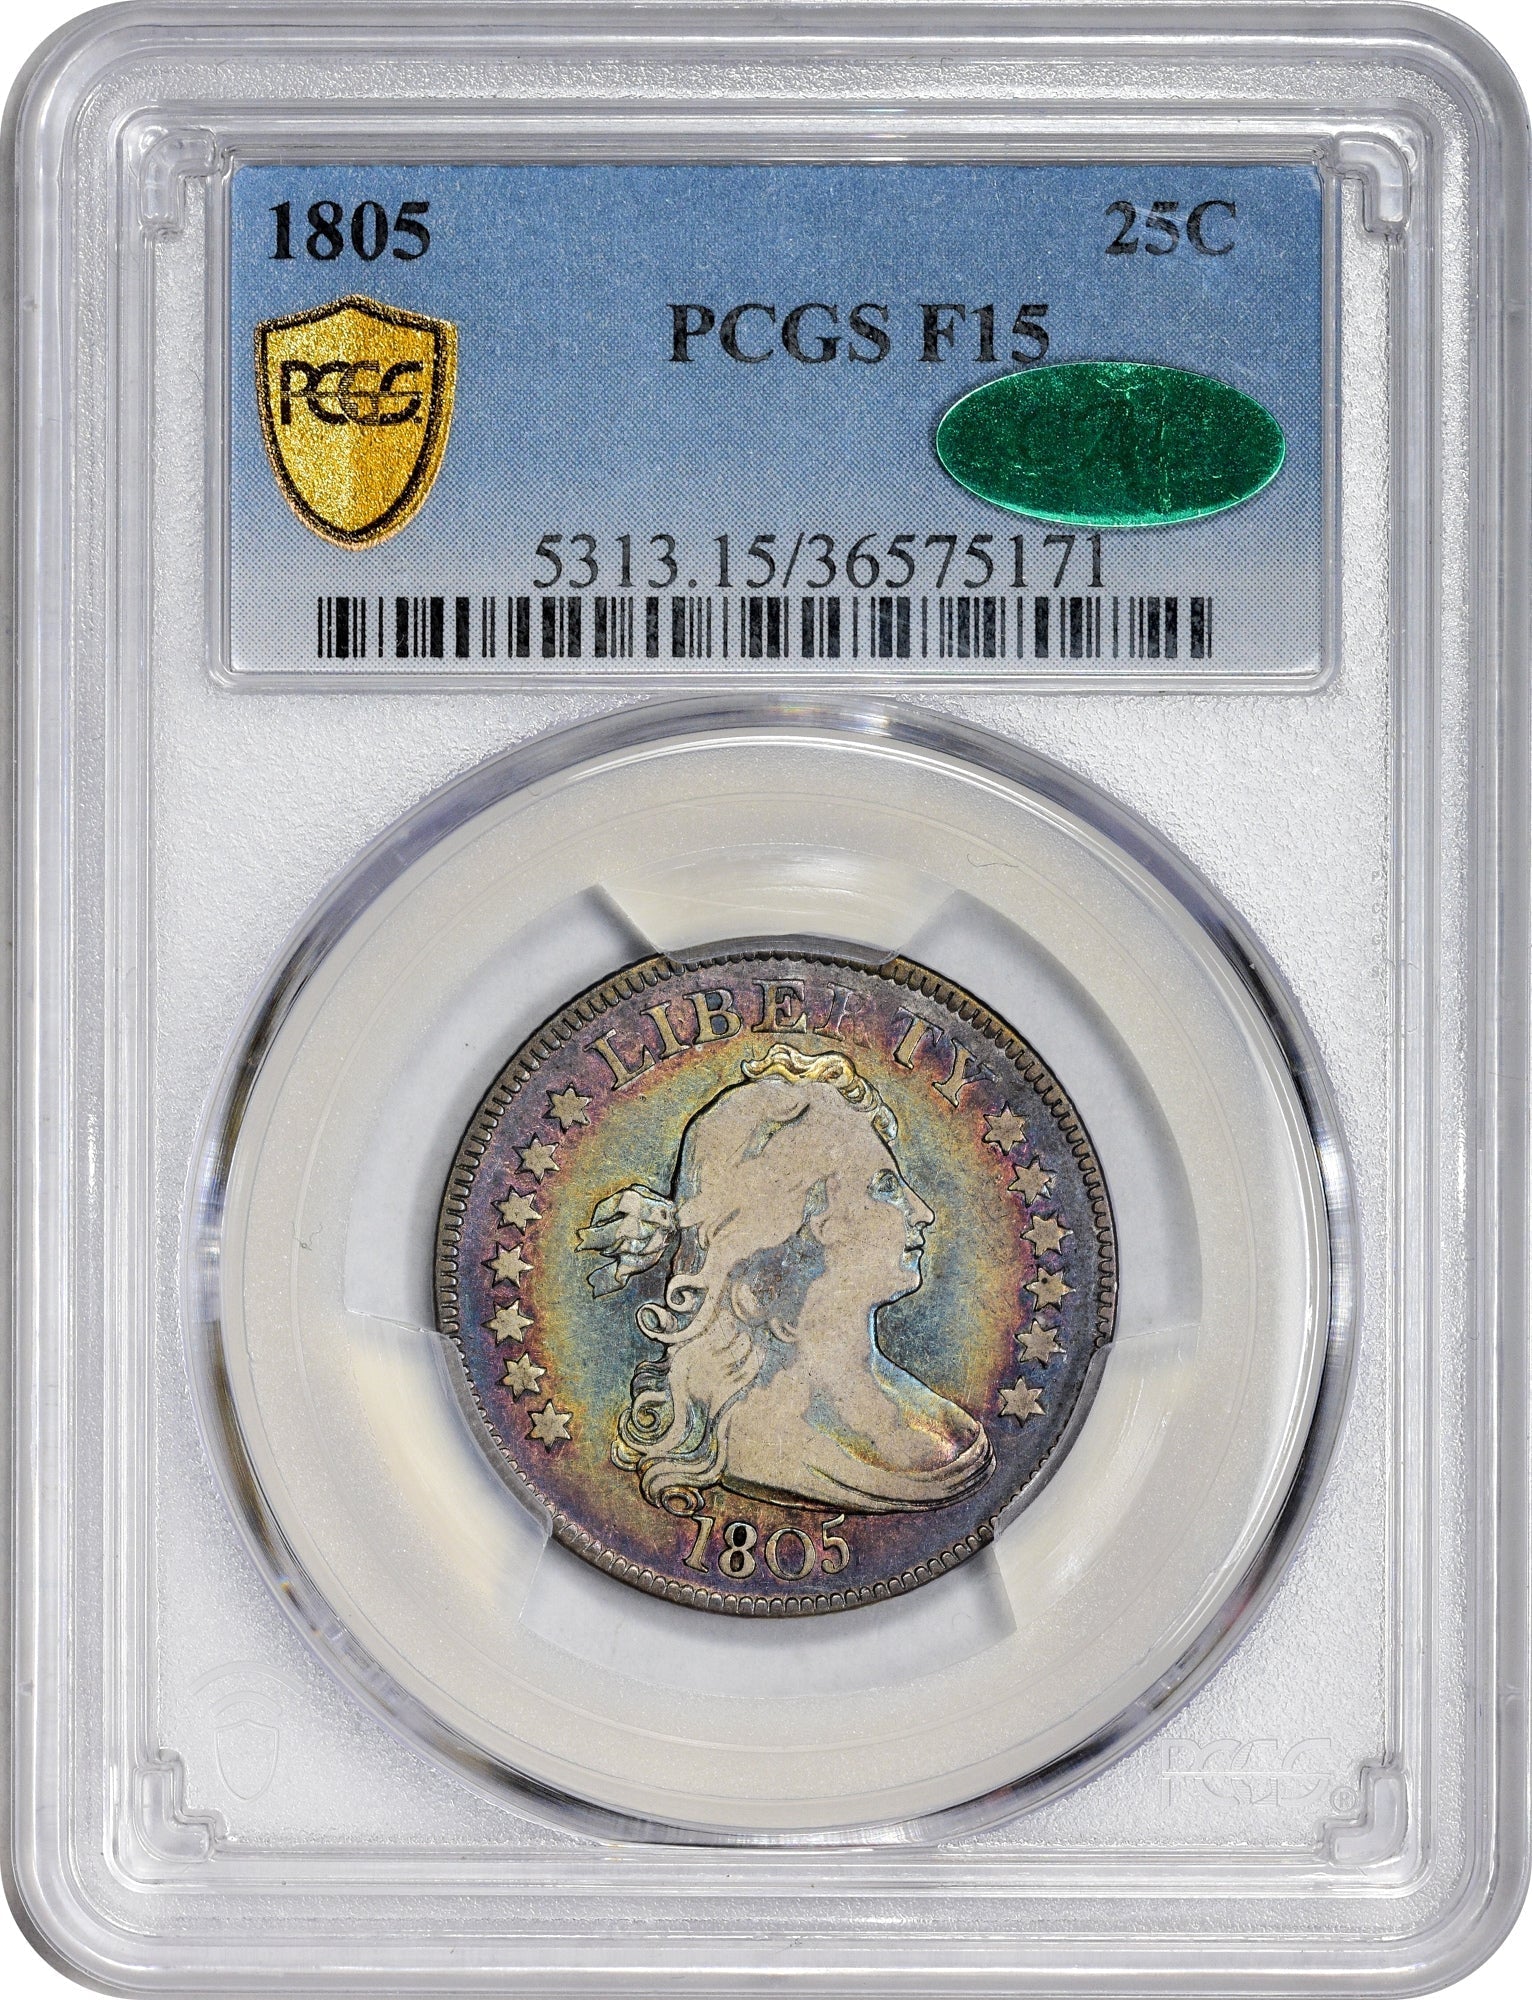 1805 25C F15 PCGS CAC - Paradime Coins | PCGS NGC CACG CAC Rare US Numismatic Coins For Sale